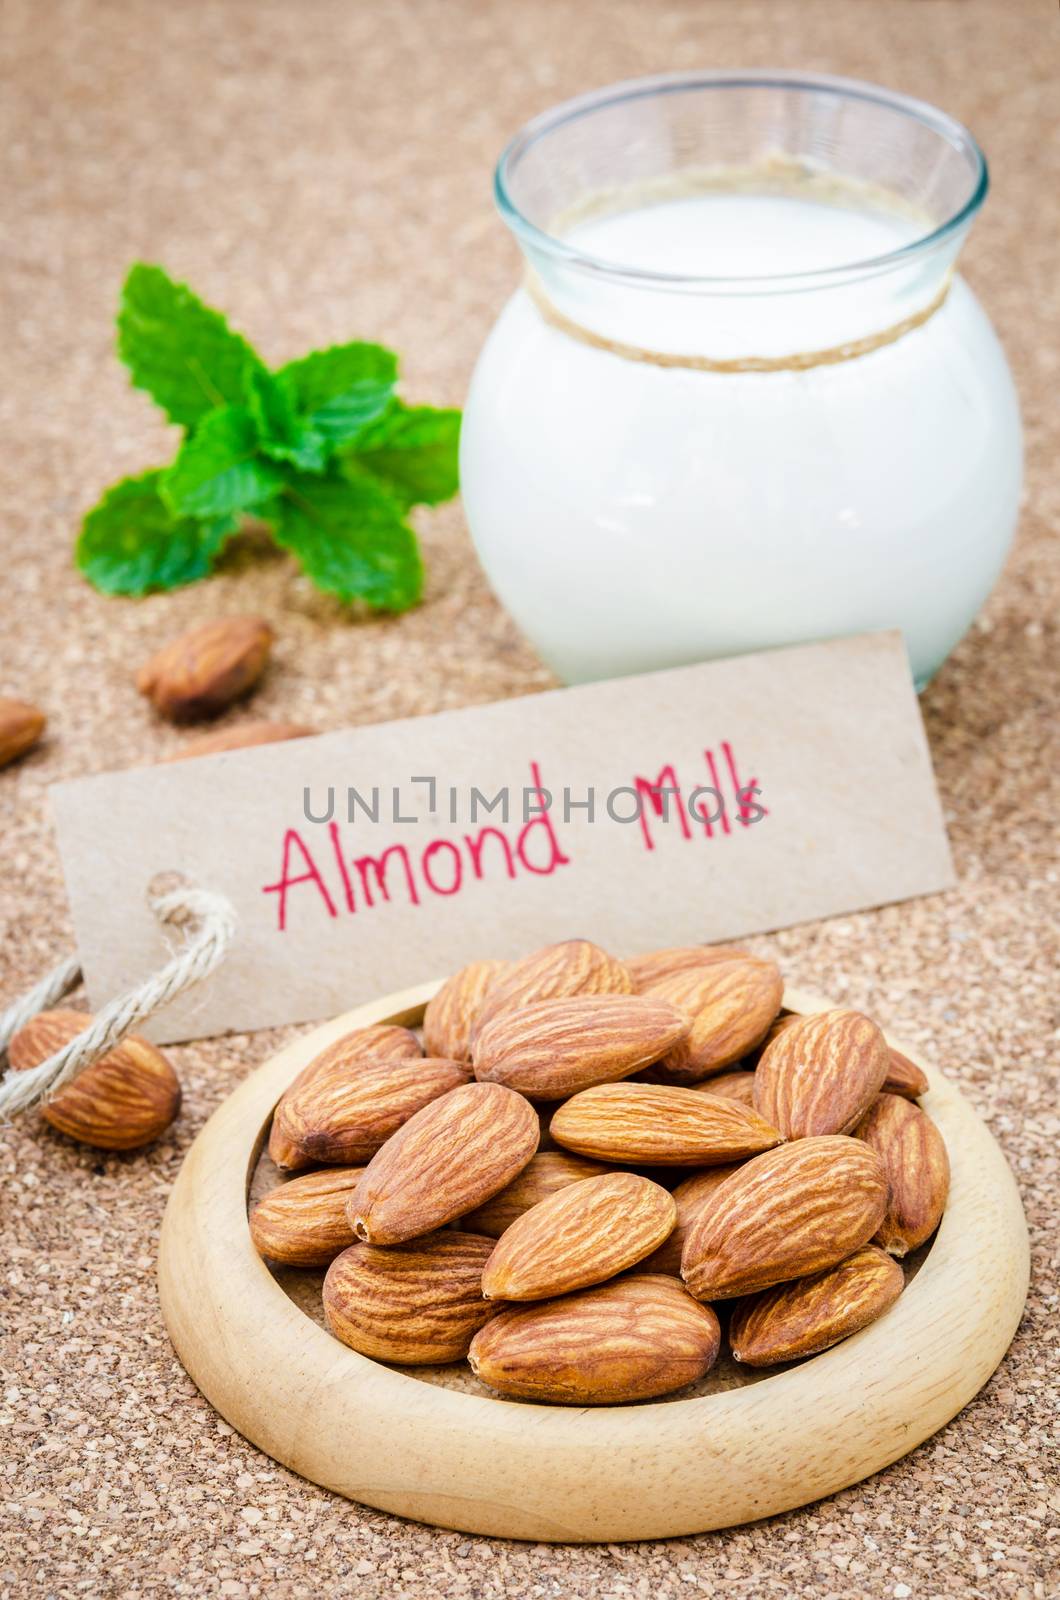 Almond and almond milk. by Gamjai